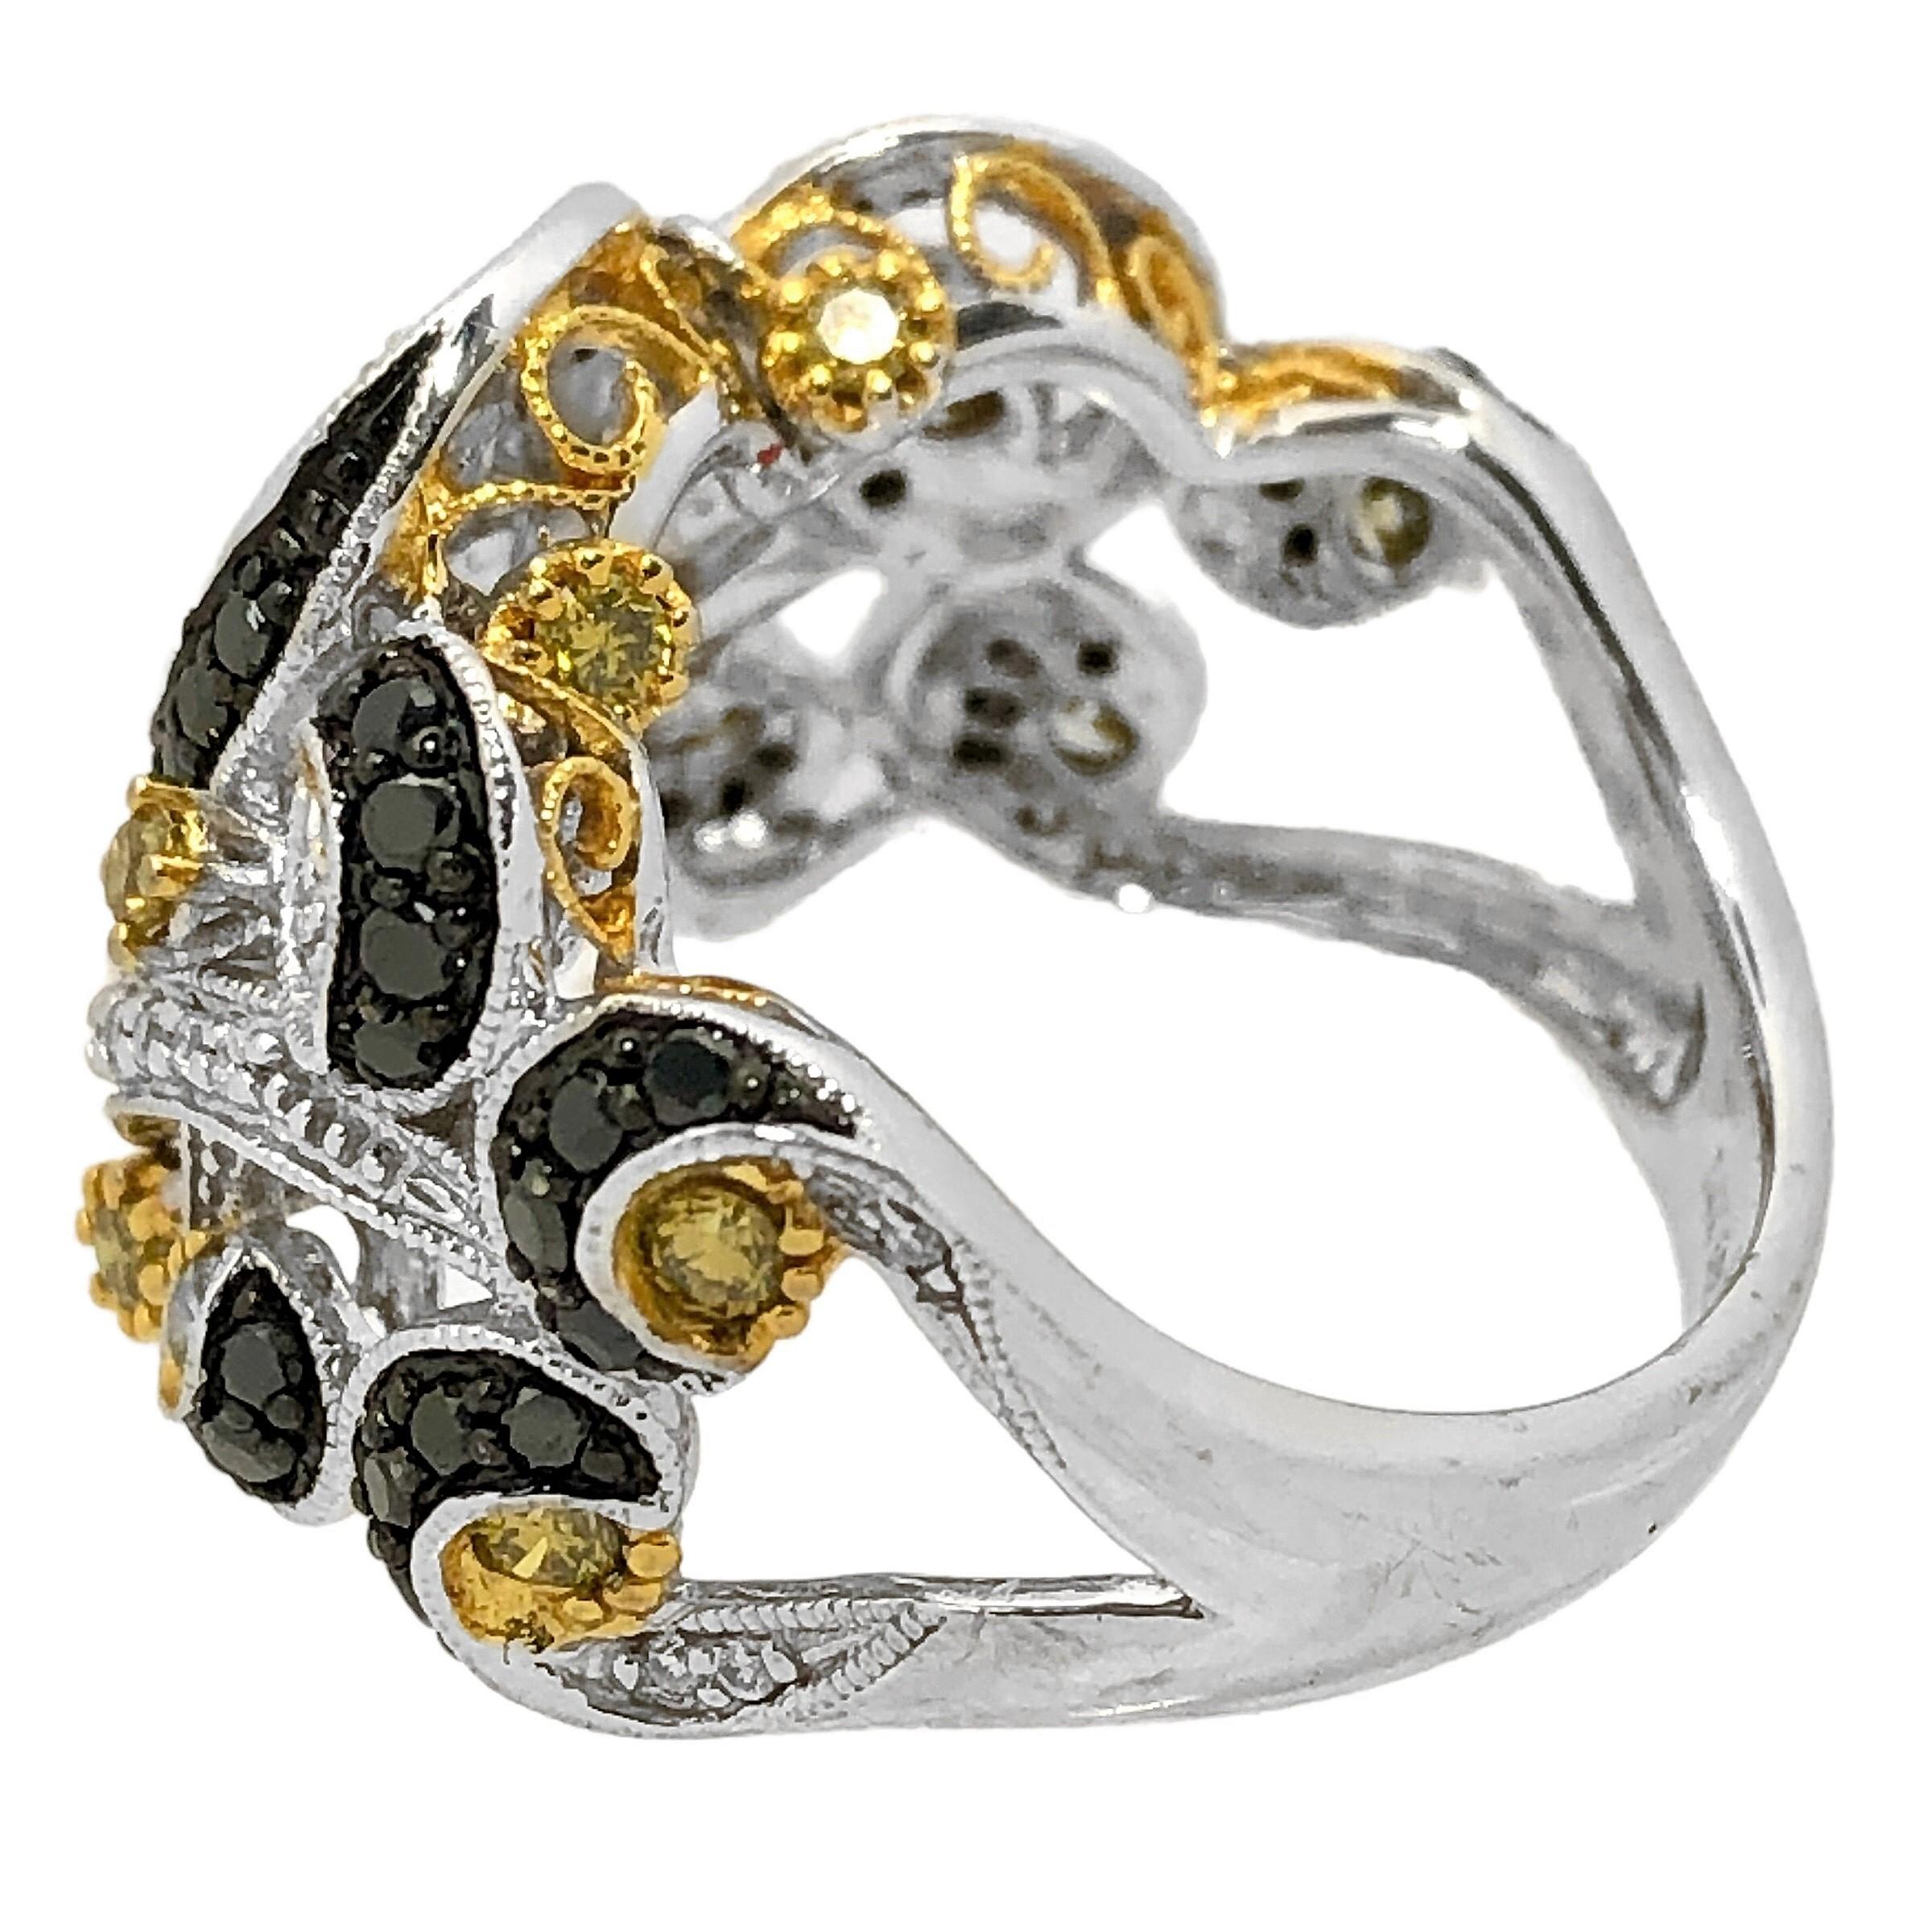 Women's Modern 14K White Gold Ring with Fancy Yellow and Black Diamonds in Swirl Motif